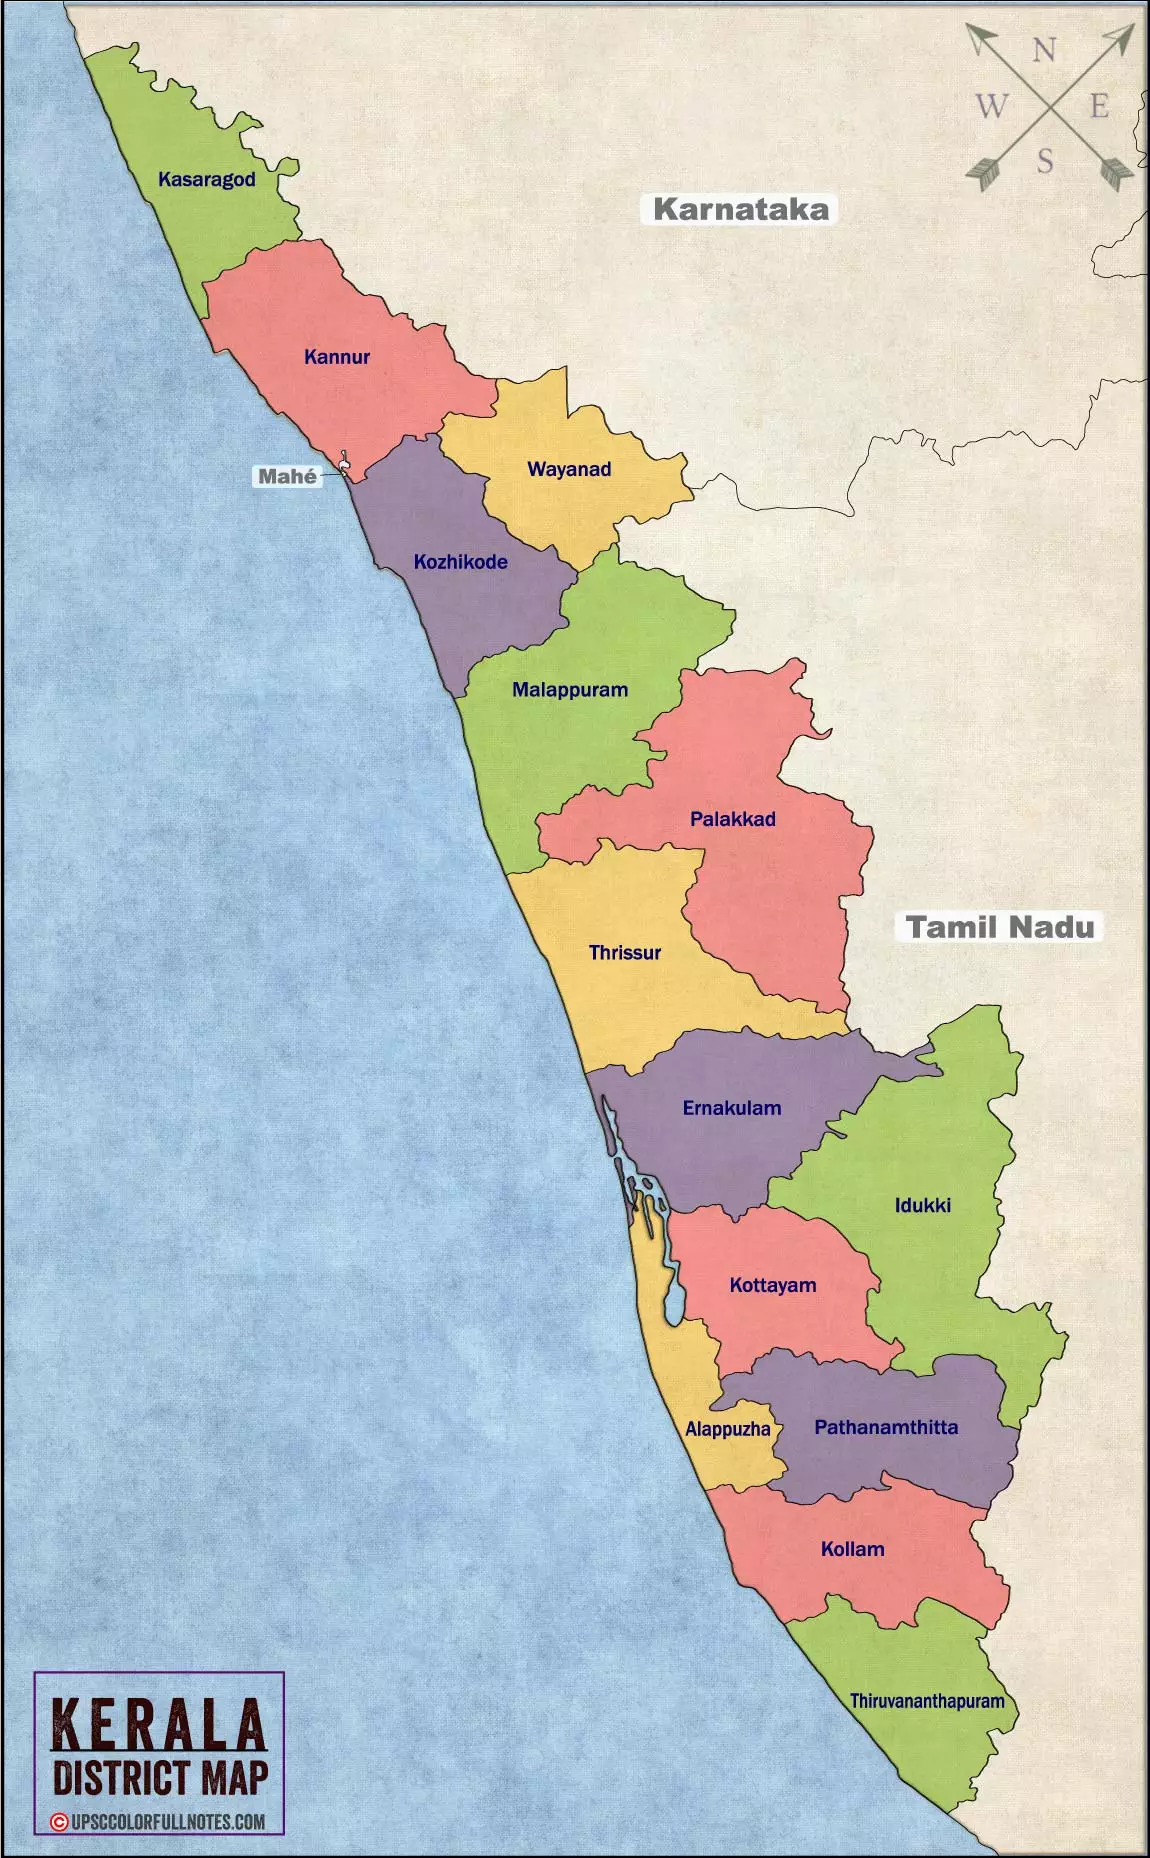 E-Rekha: Kerala Land Records Details, Online Land Survey Verification